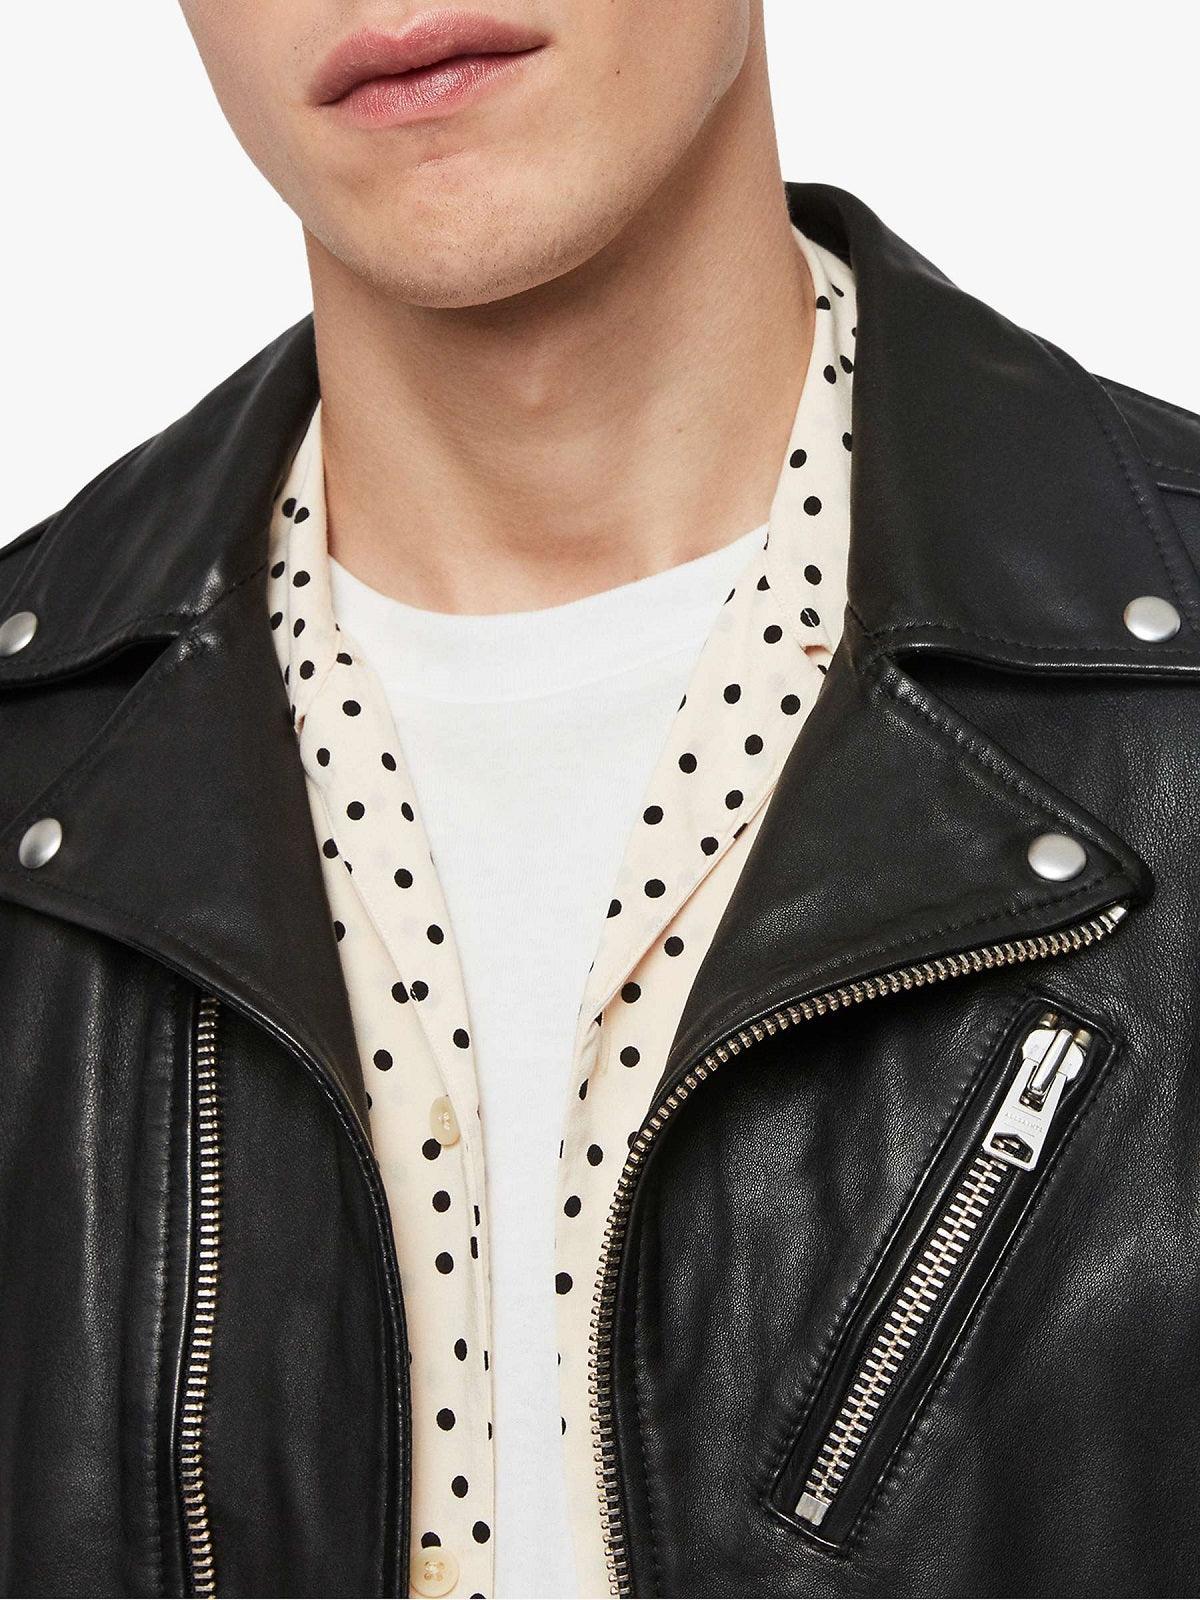 Men's Natty Black Leather Jacket